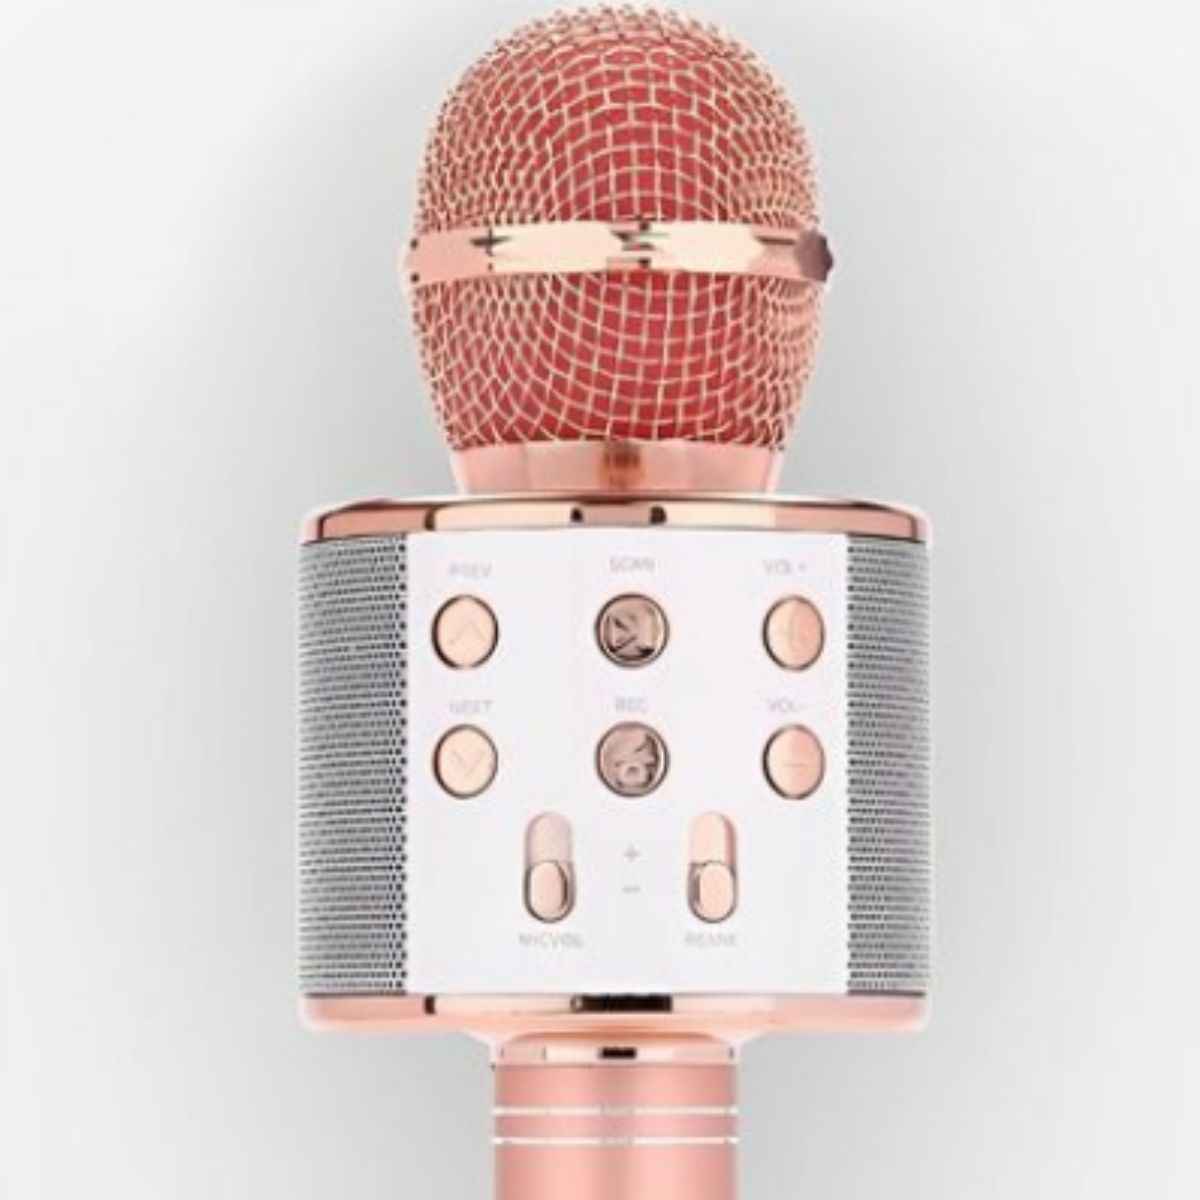 Karaoke Blau Mikrofon Bluetooth-Mikrofon für SYNTEK Bluetooth-Karaoke-Mikrofon,EINZIGARTIGES unvergessliches